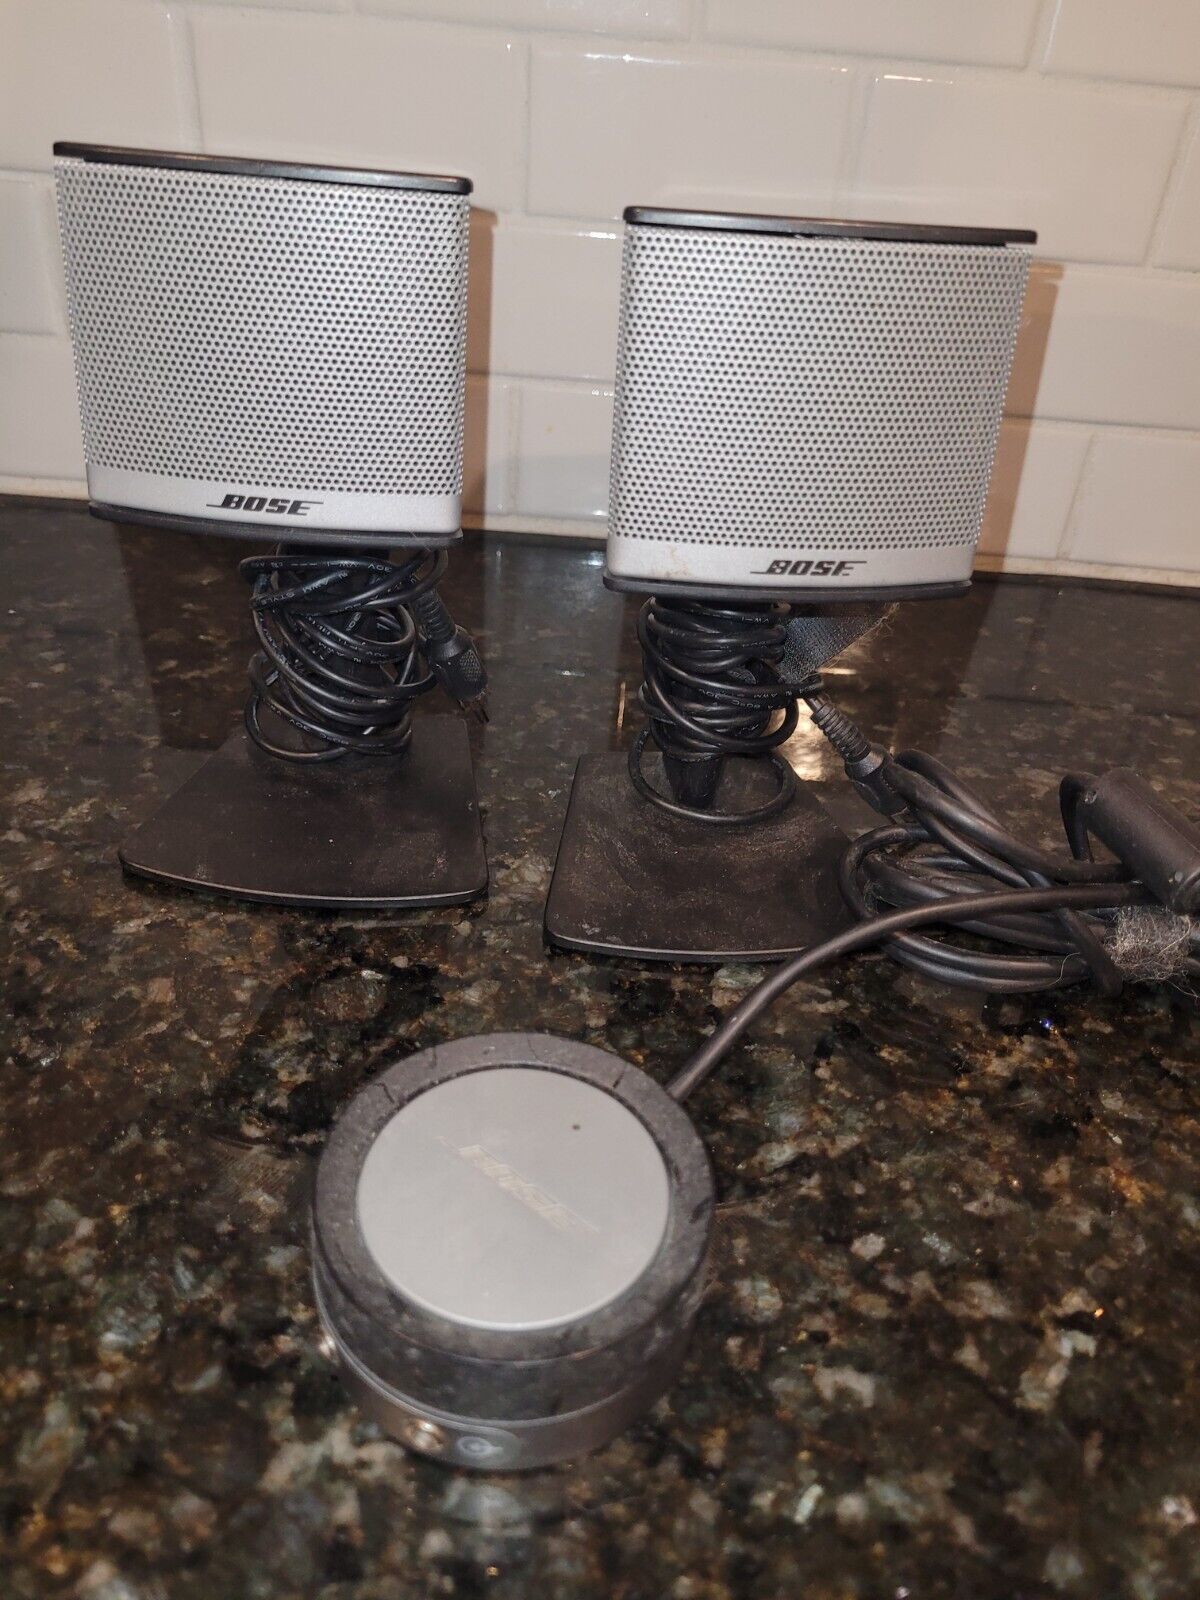 Bose Companion 3 Series II Speakers and Volume Control Pod